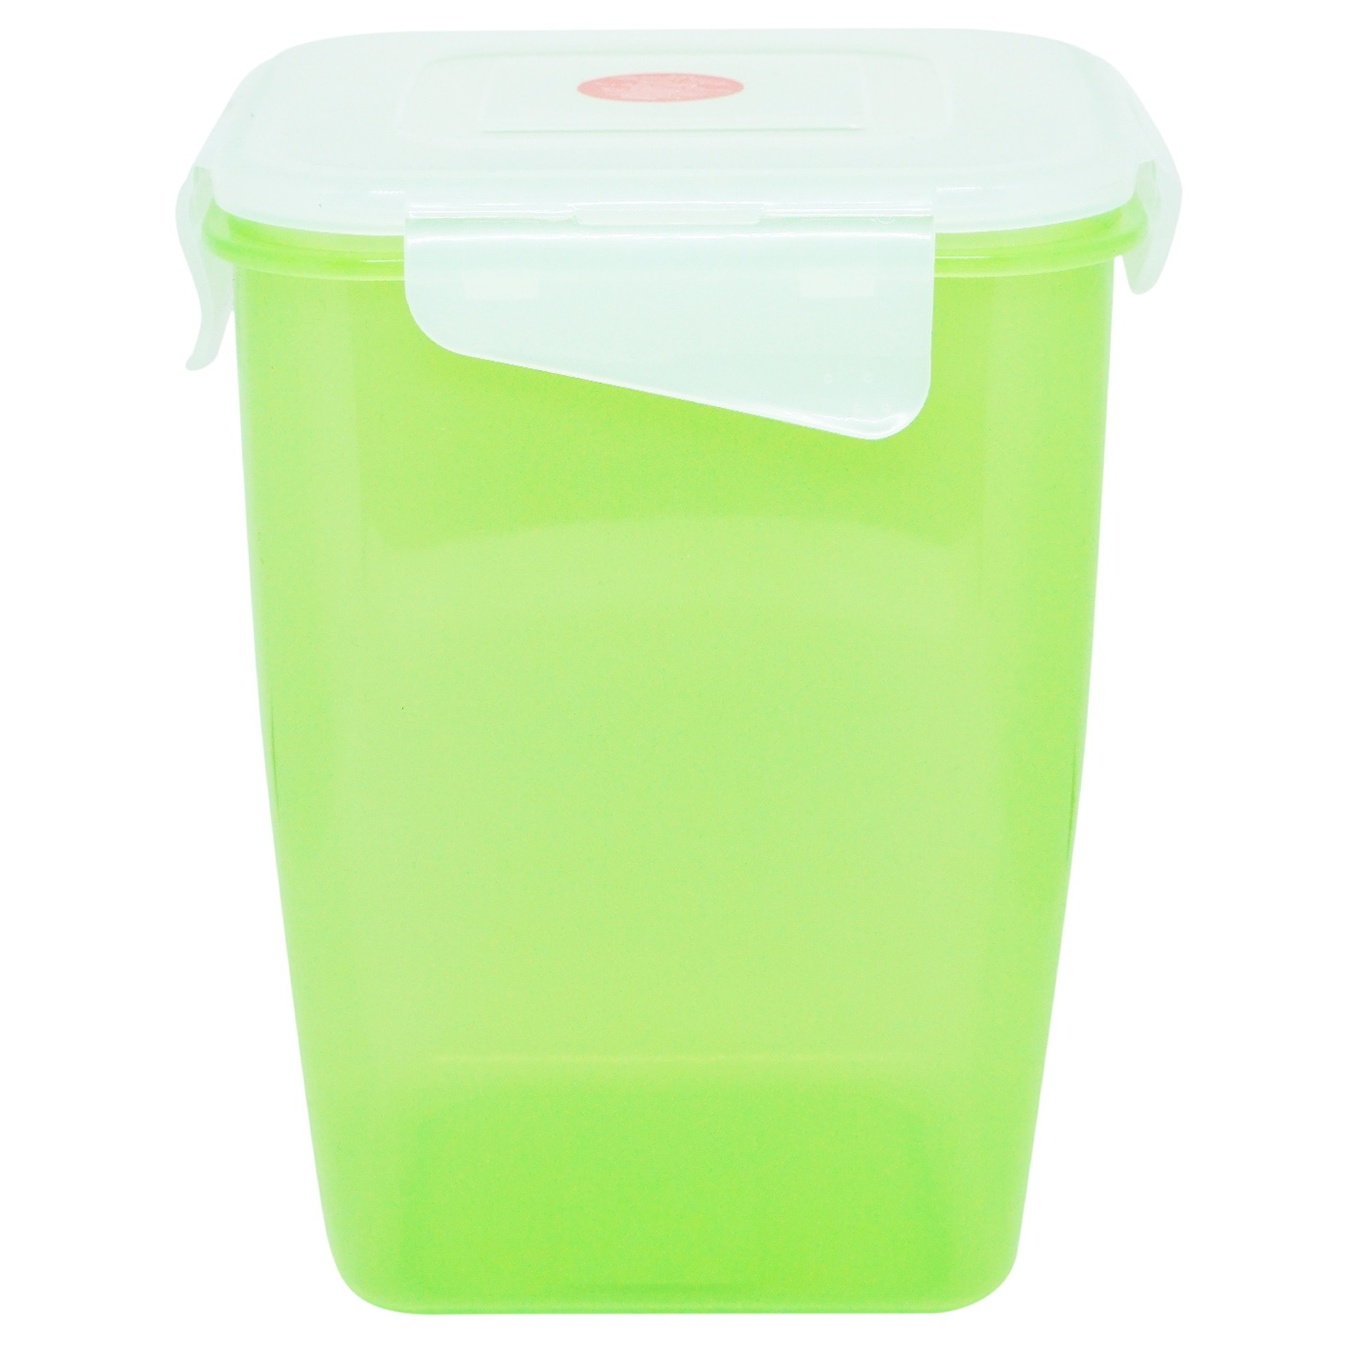 Universal container Fiesta Aleana deep green/transparent 2 l